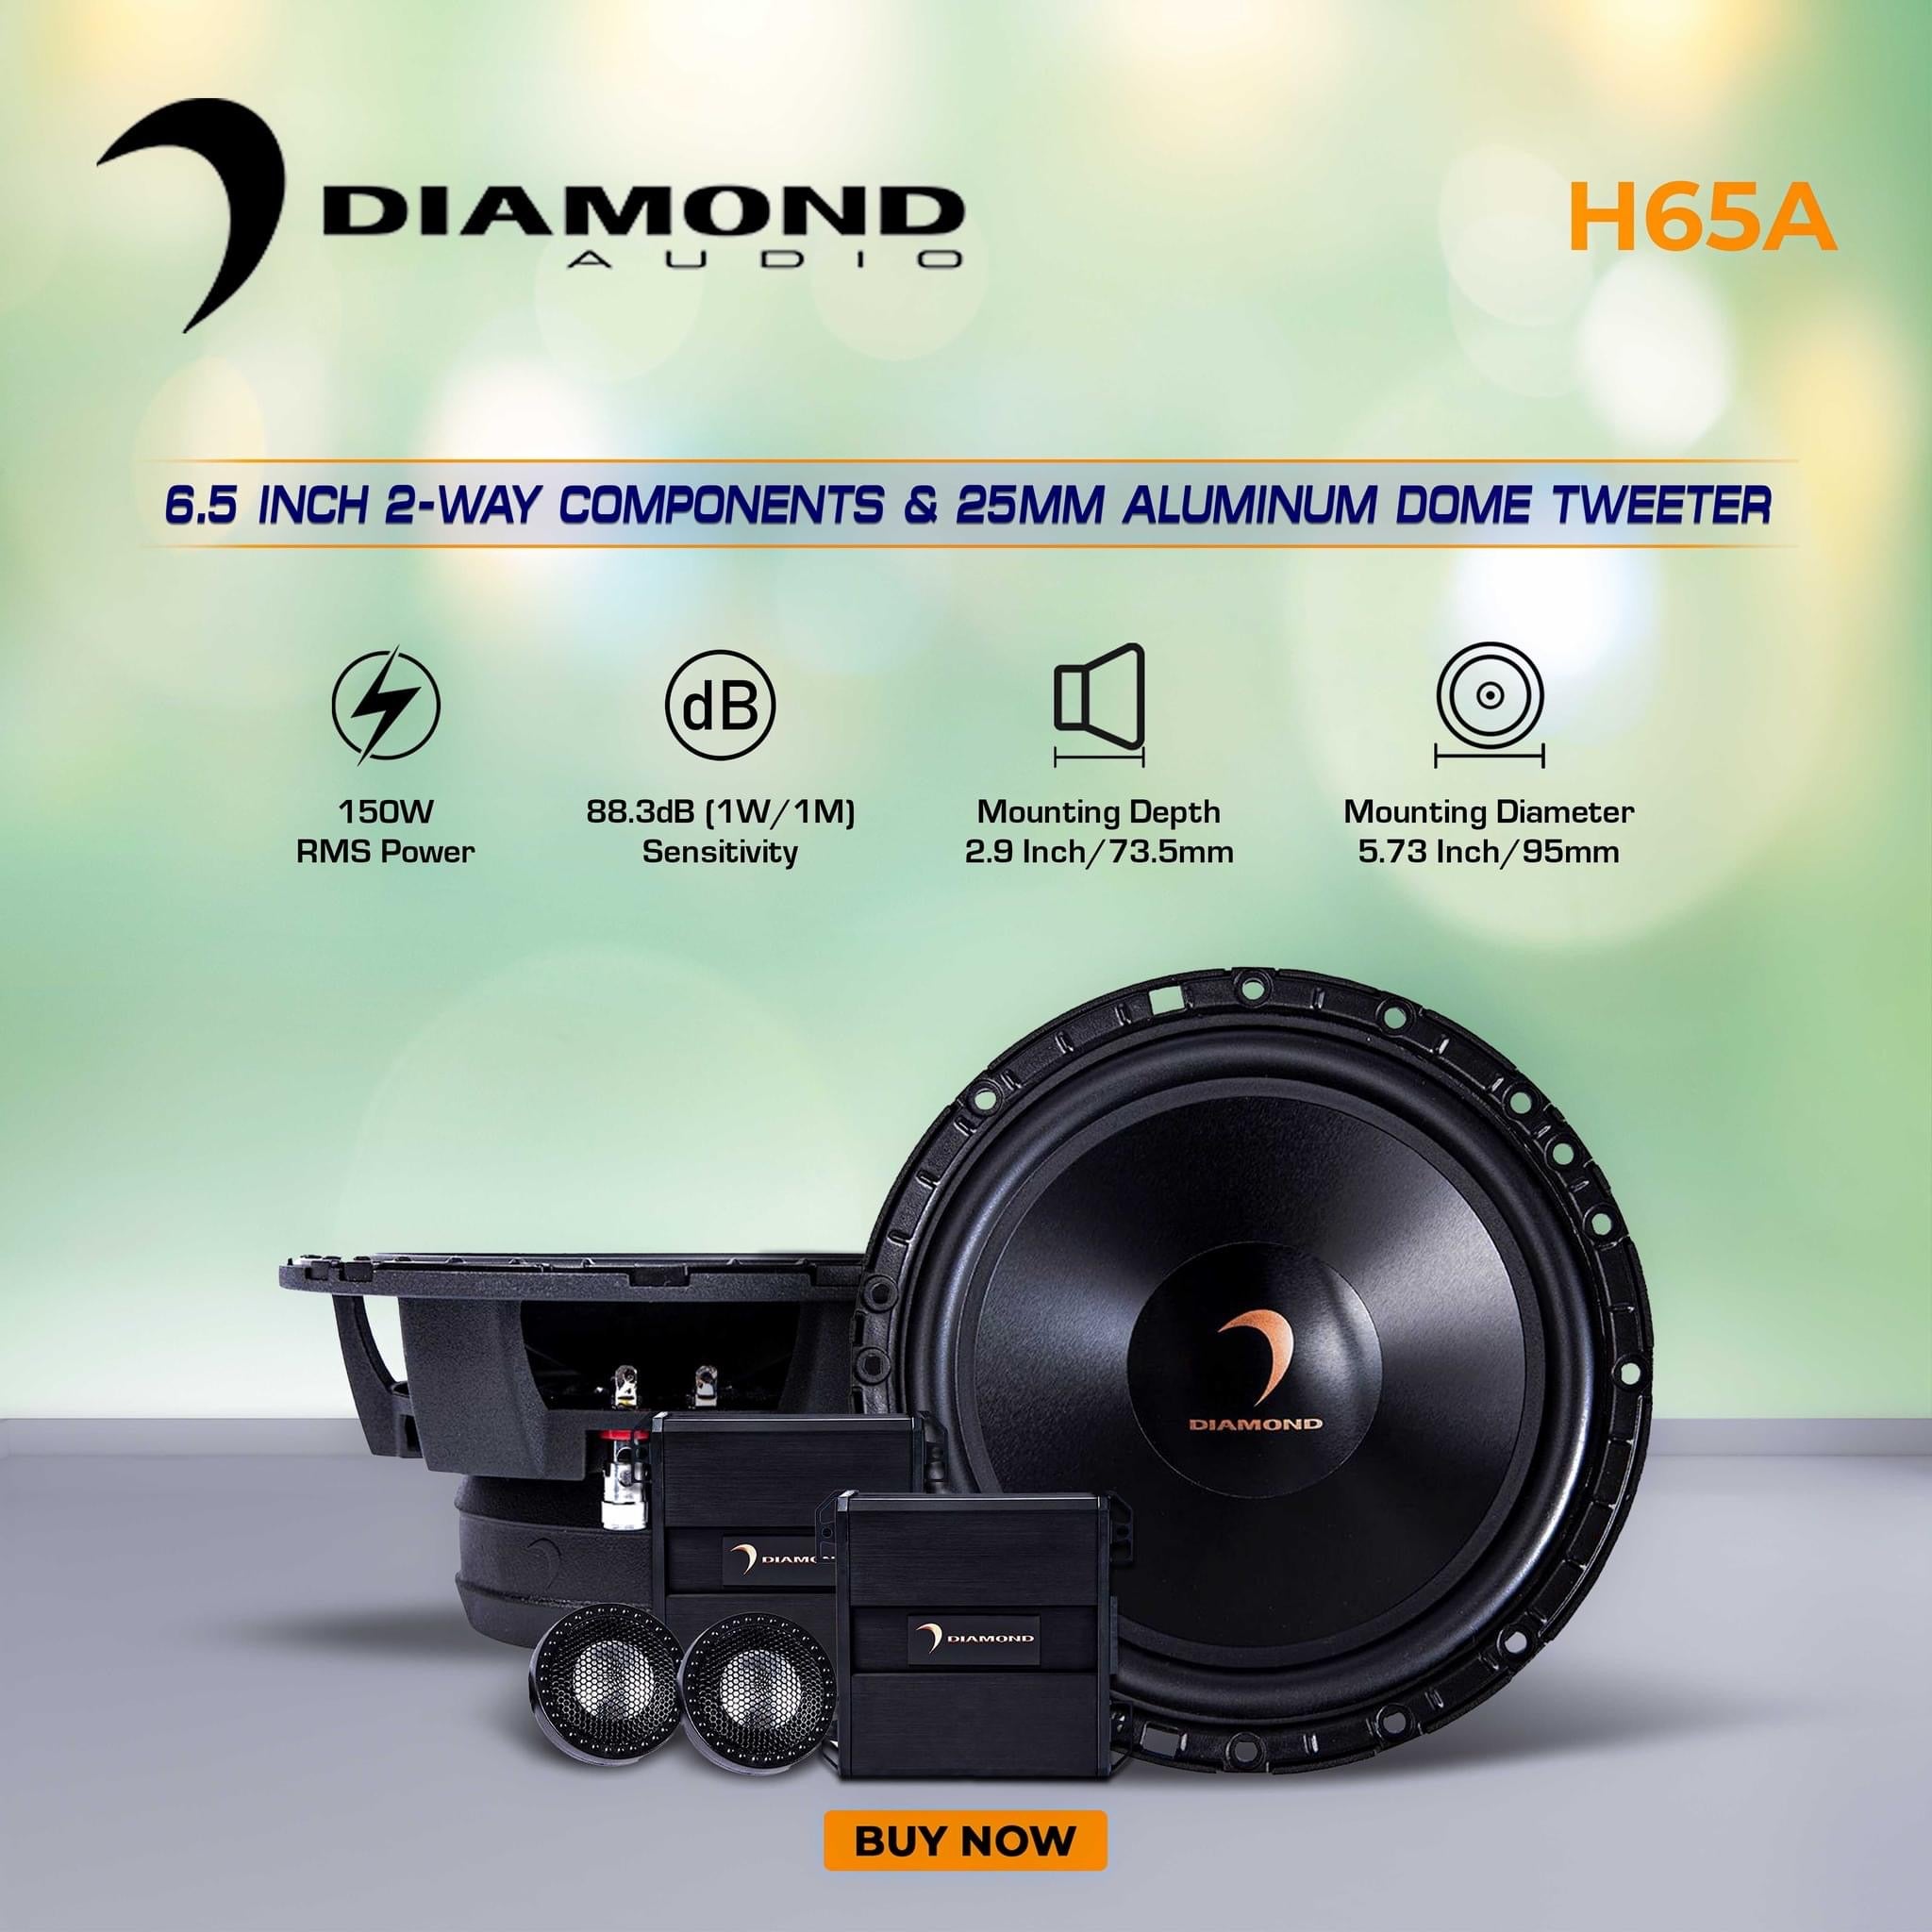 Diamond Audio H65A HEX 6.5" 2-Way Components